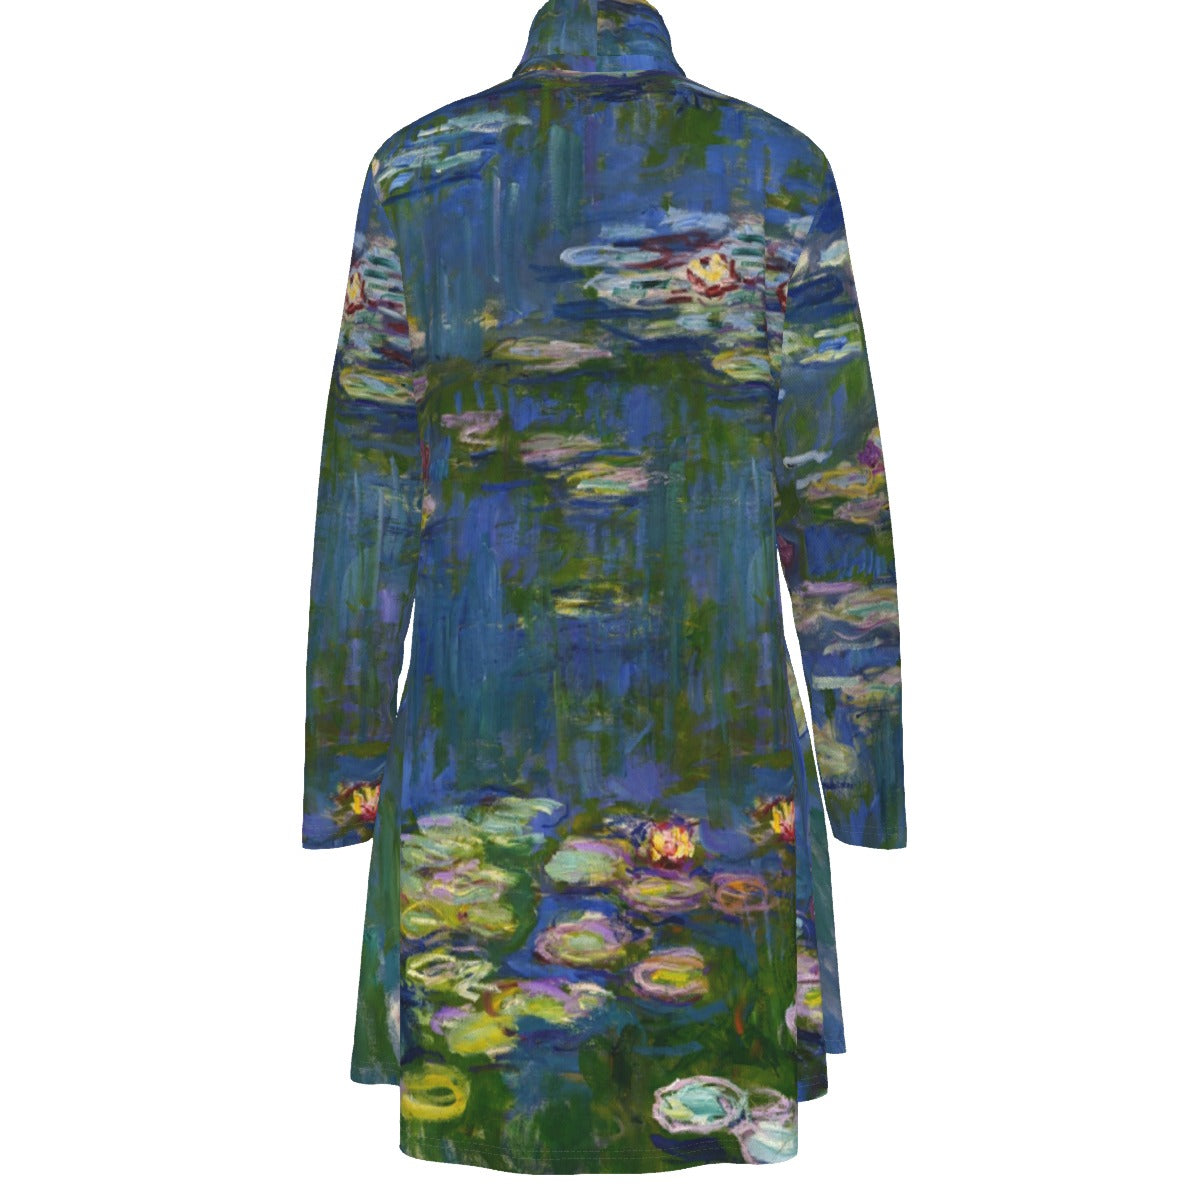 Claude Monet Inspired High Neck Garment - Back View